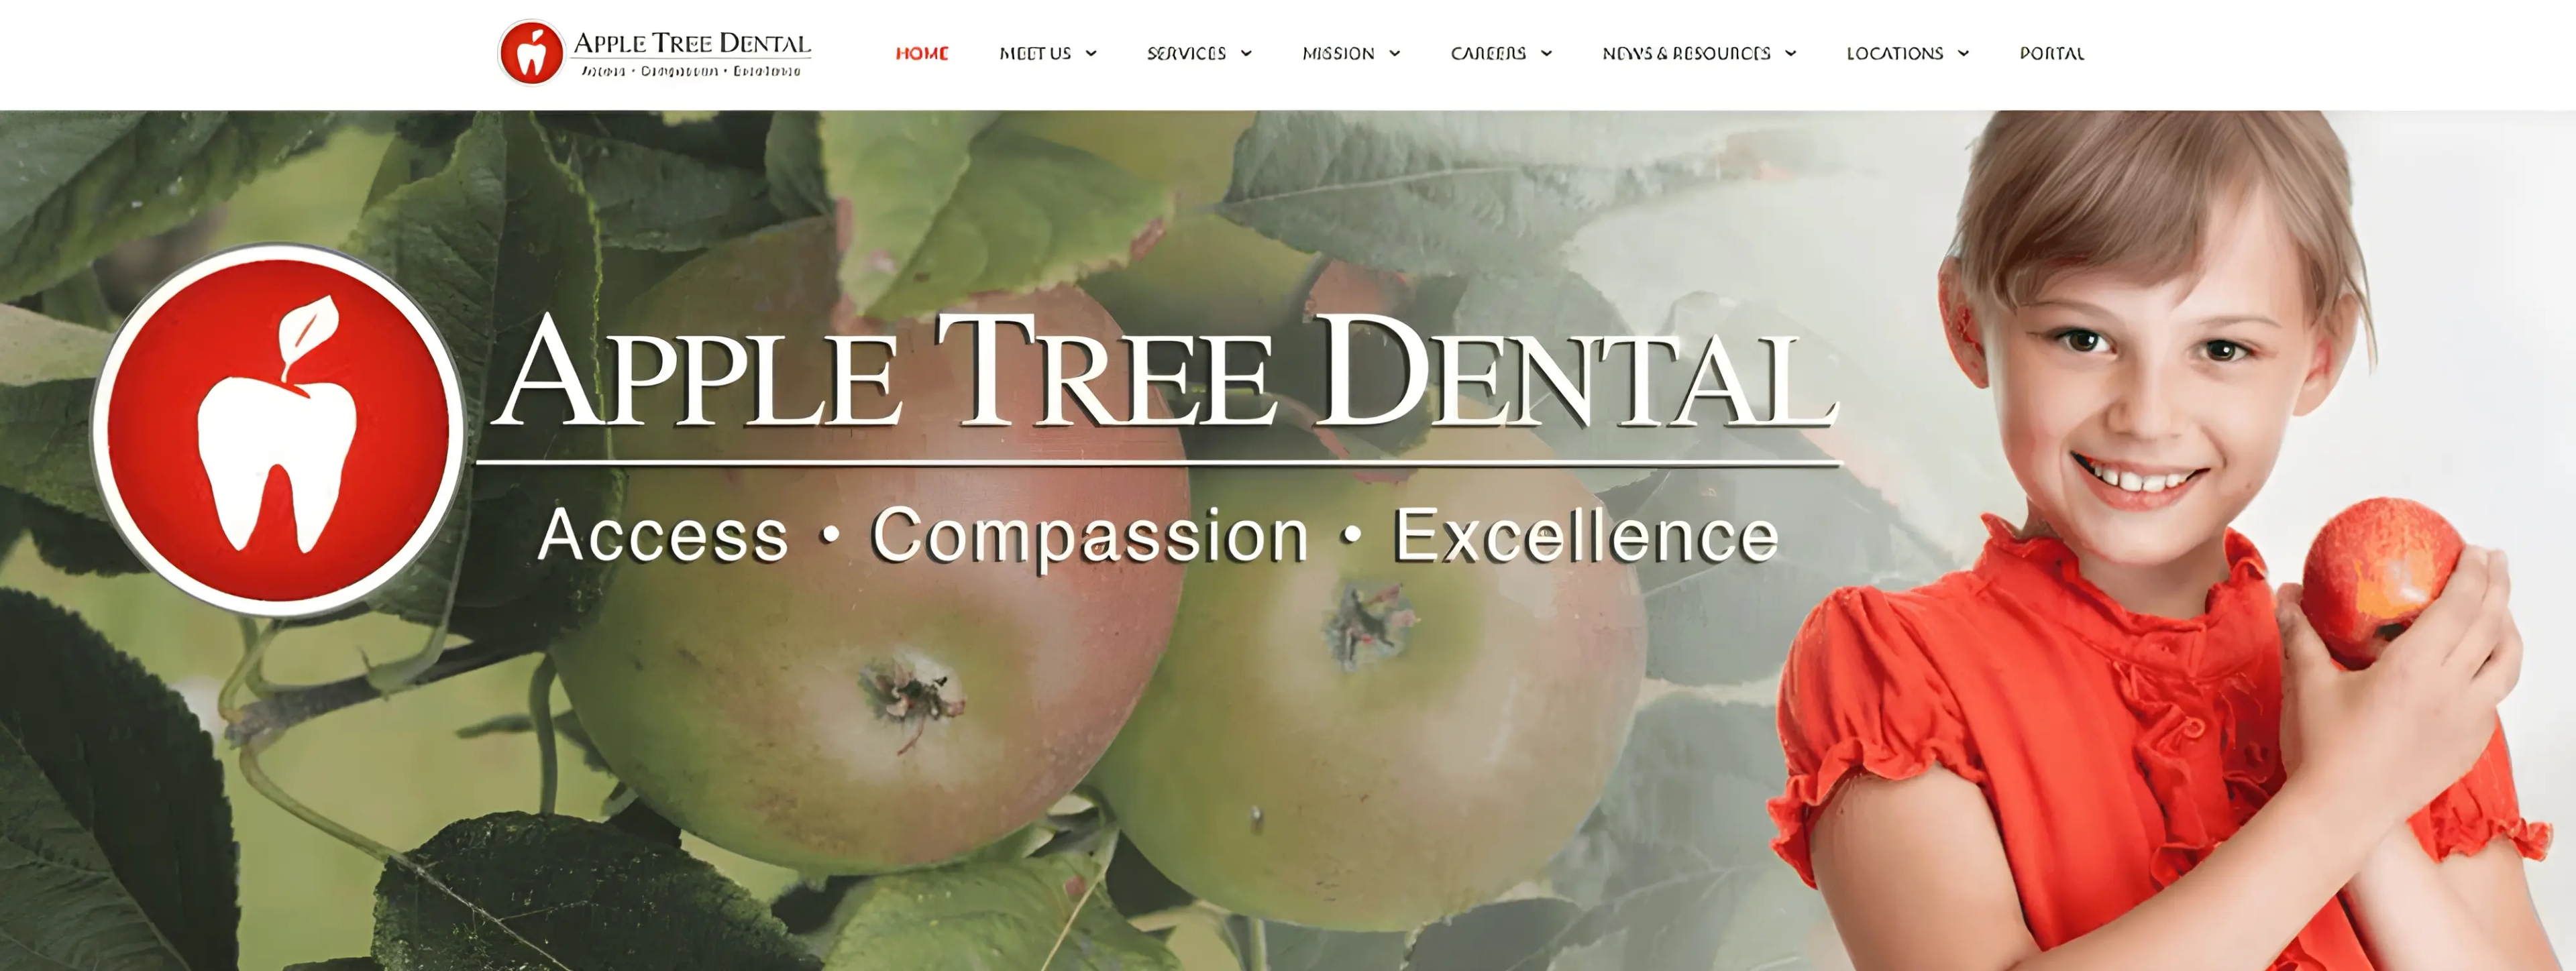 Apple Tree Dental: teledentistry from 2002 to 2023